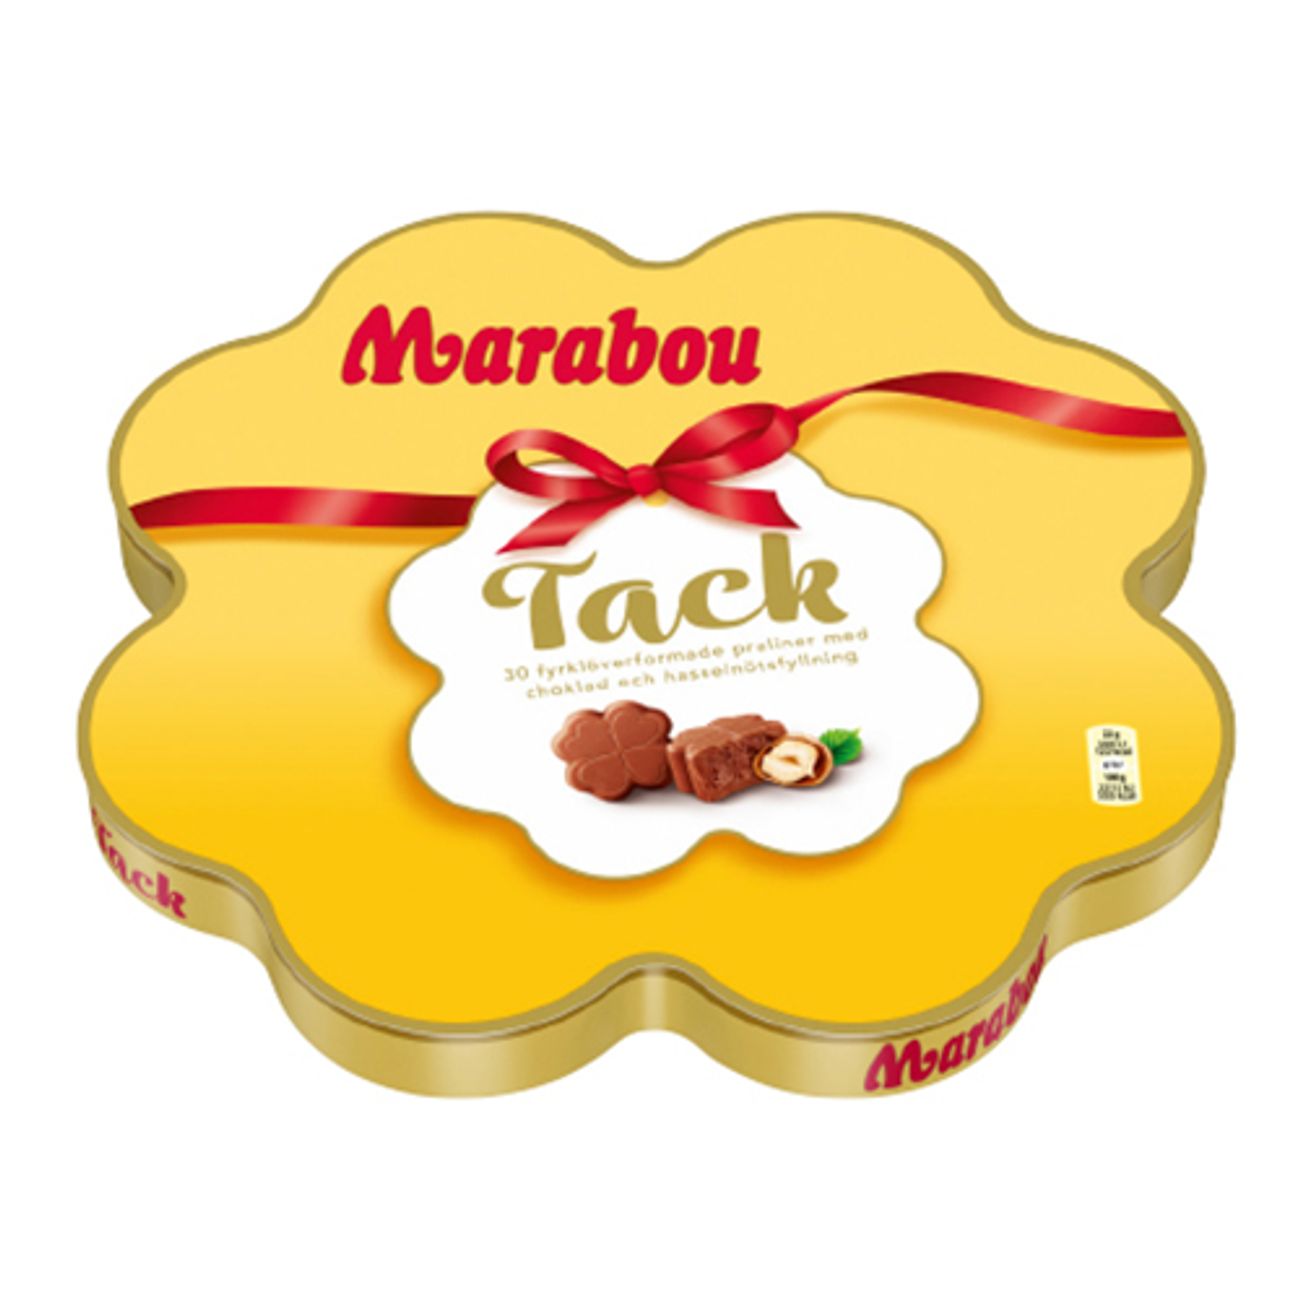 marabou-tack-presentask2-1